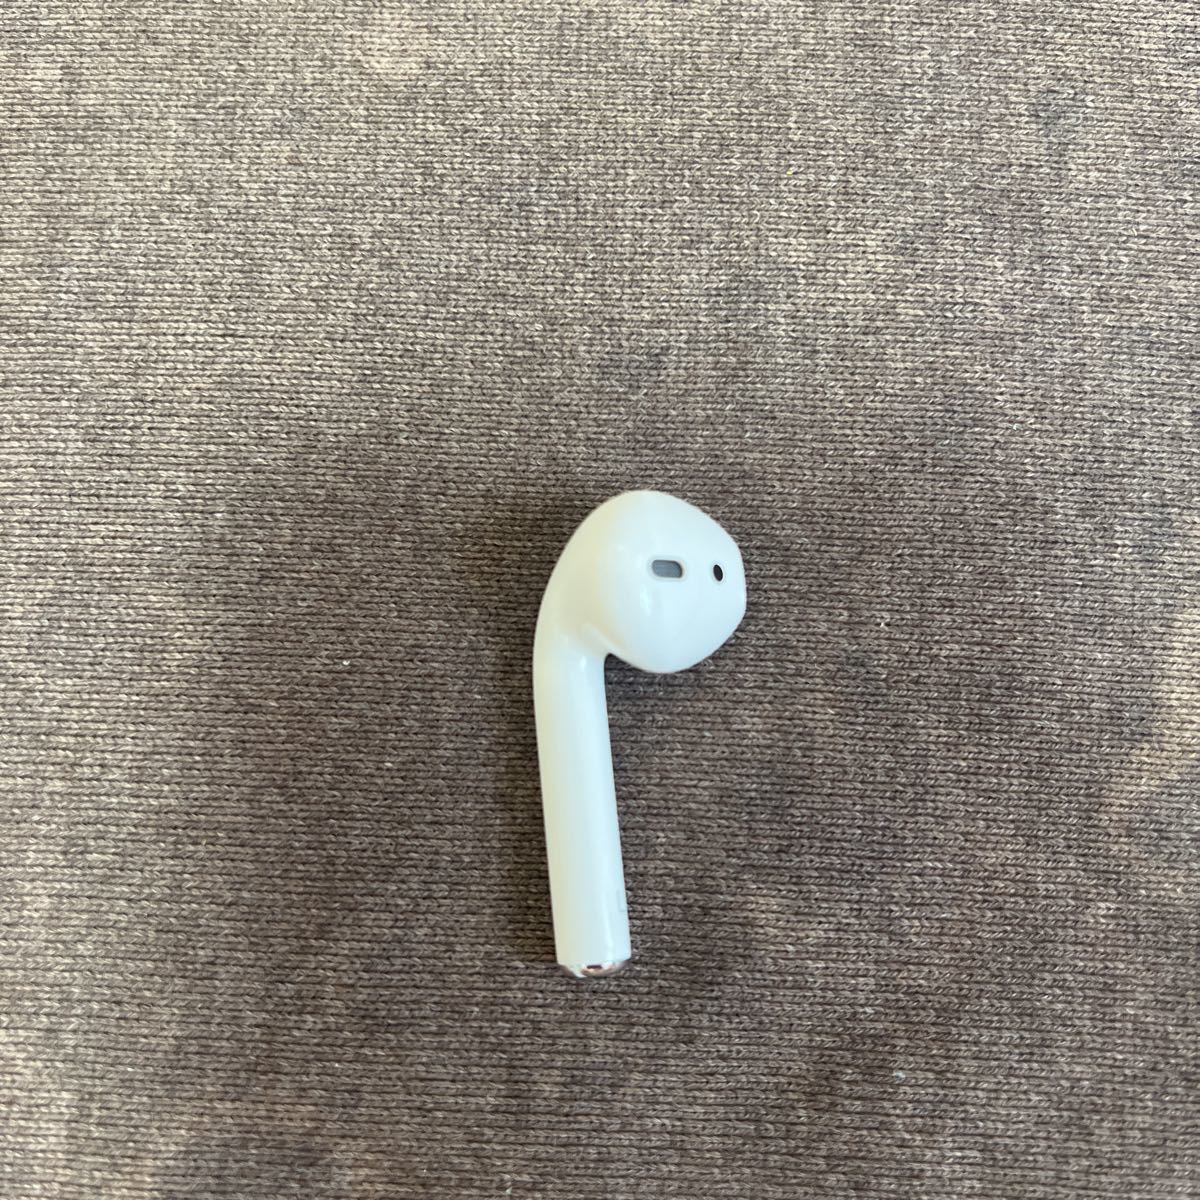 Apple純正 AirPods 第2世代 左　イヤホン MV7N2J/A 左耳のみ 新品未使用品